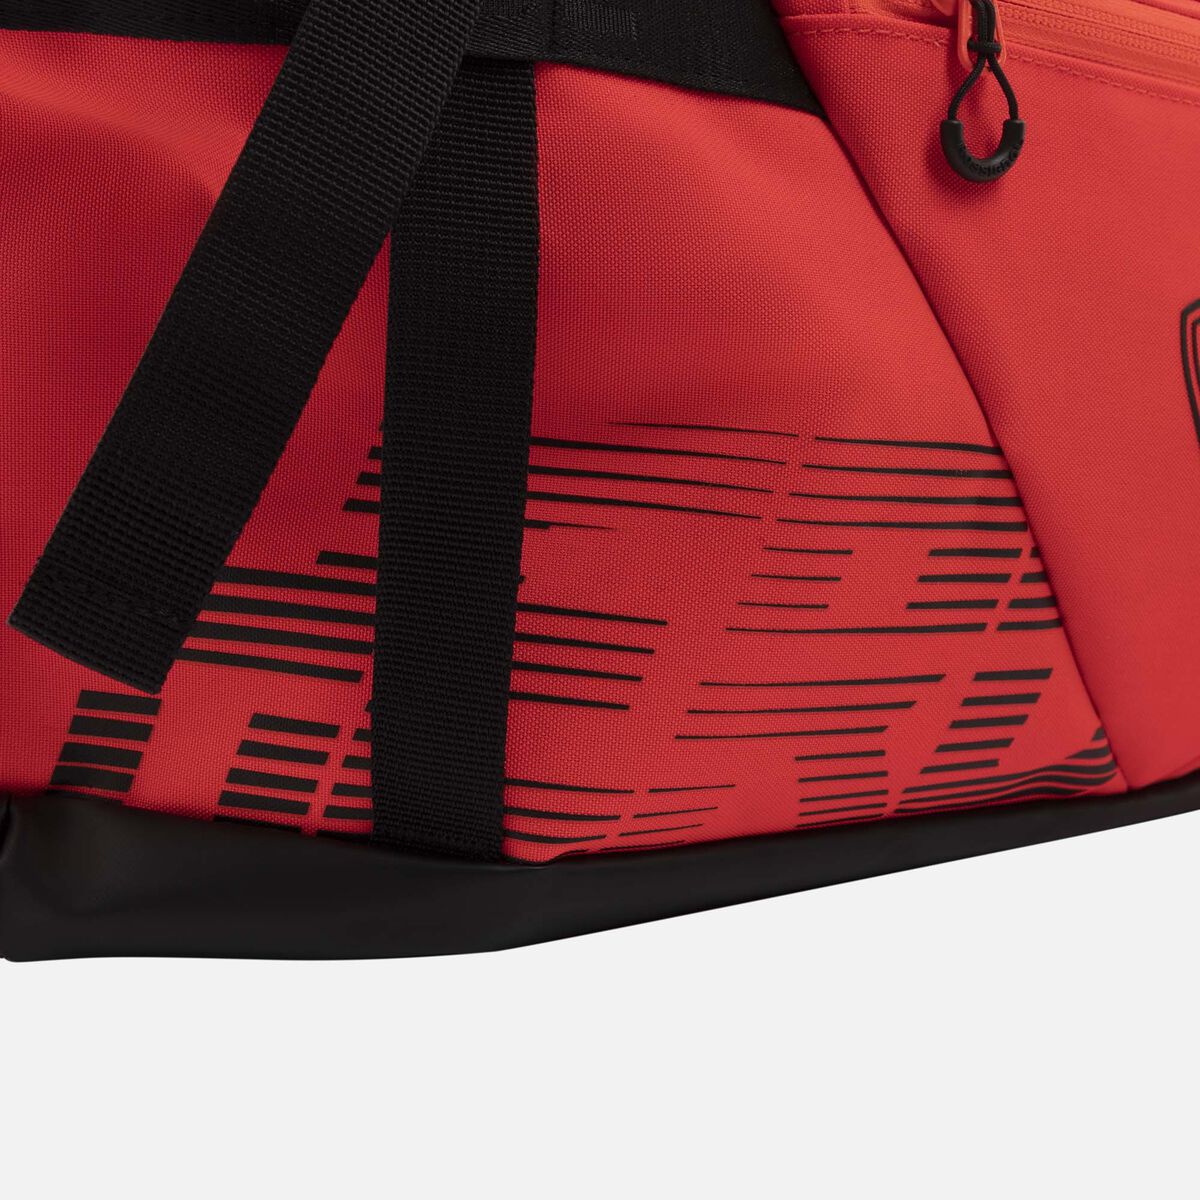 Unisex's Duffle Bag 60L HERO